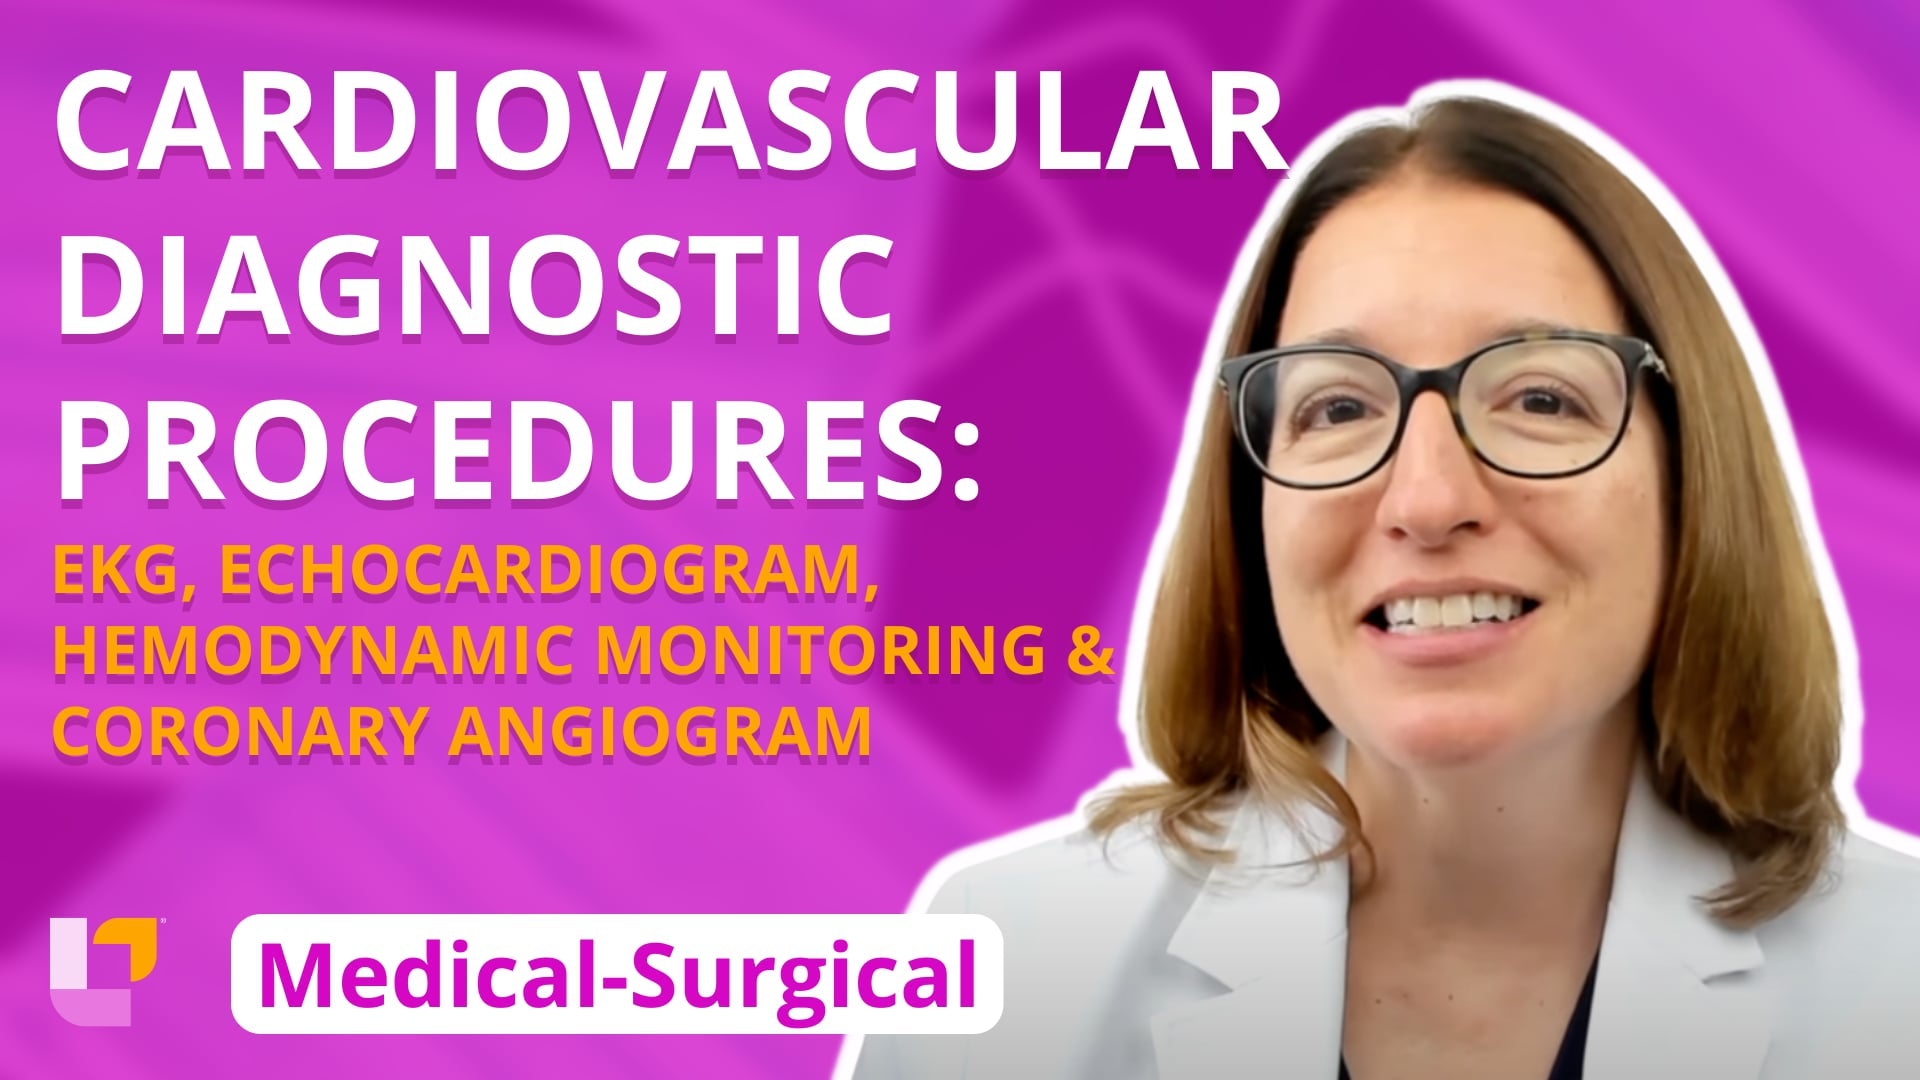 Med-Surg - Cardiovascular System, part 5: Diagnostic Procedures, Coronary Angiogram - LevelUpRN